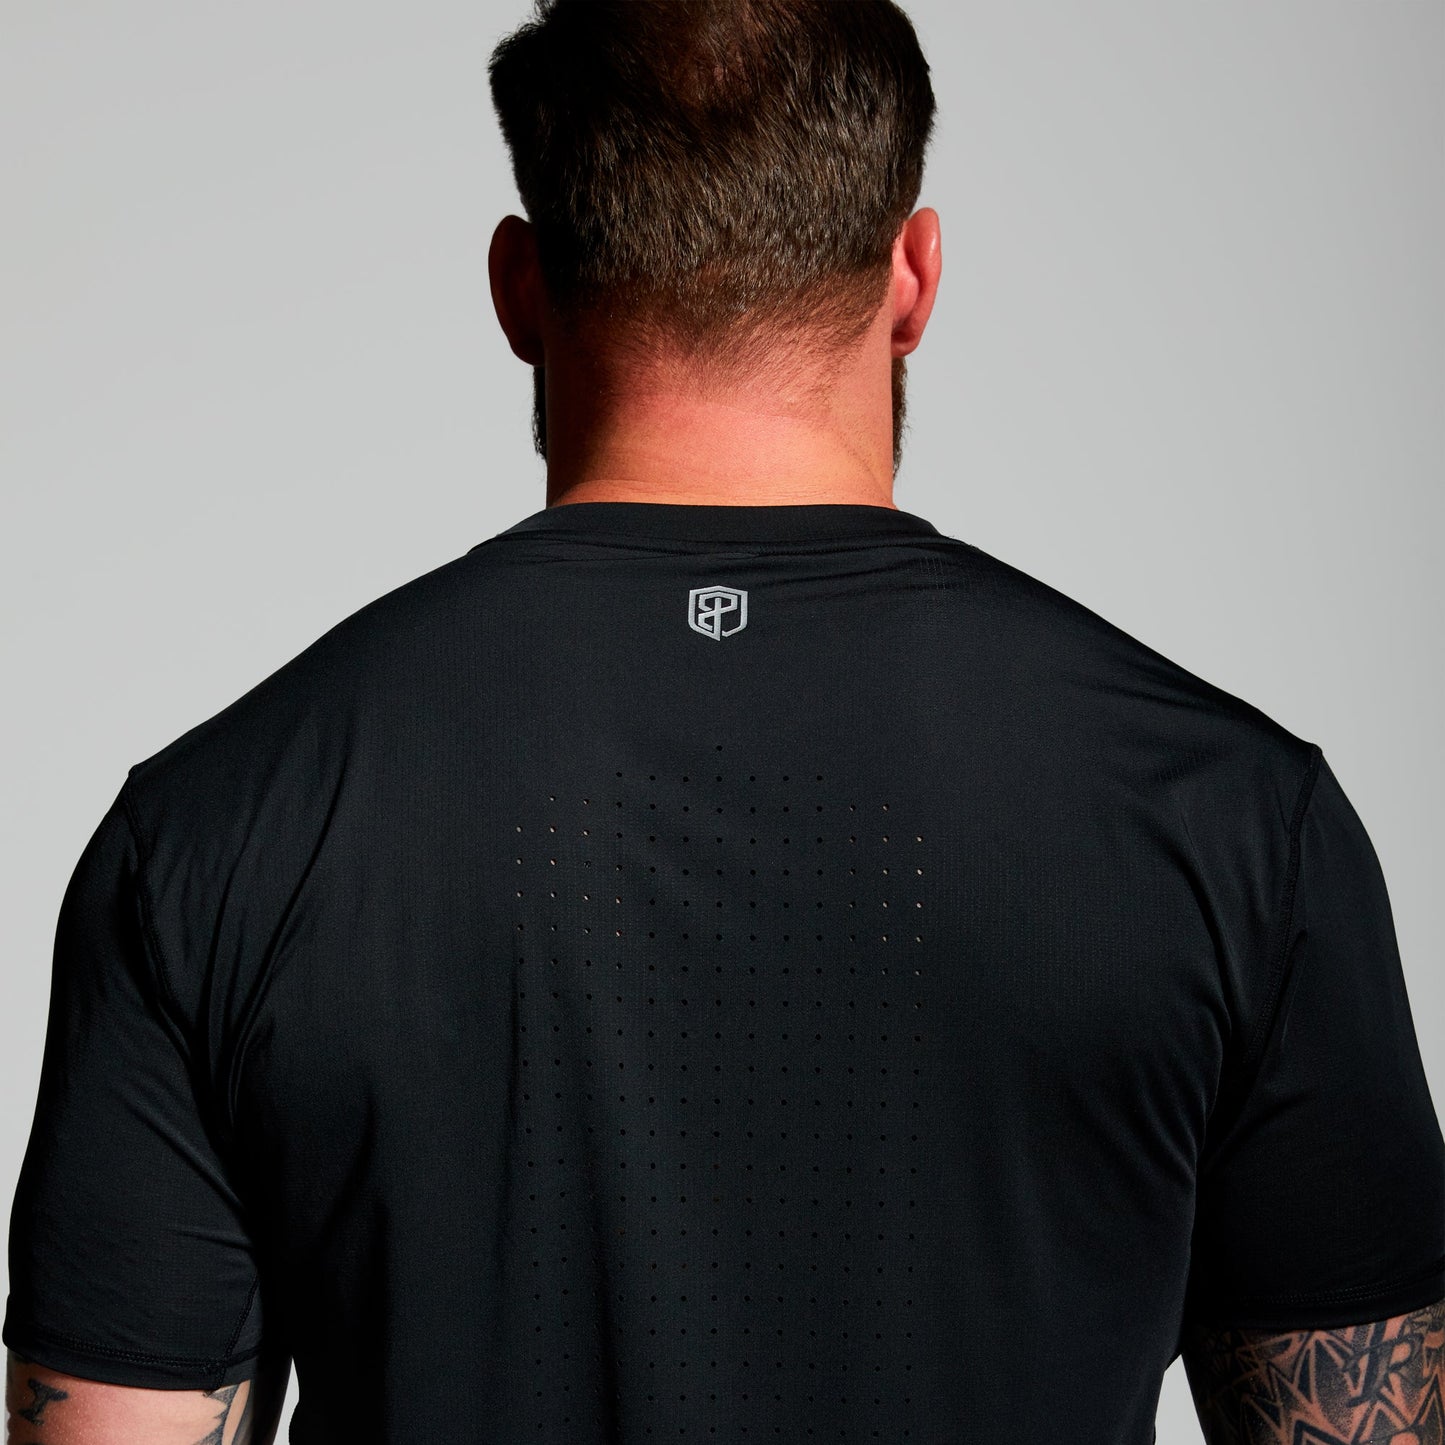 Men's Endurance Shirt (Black)